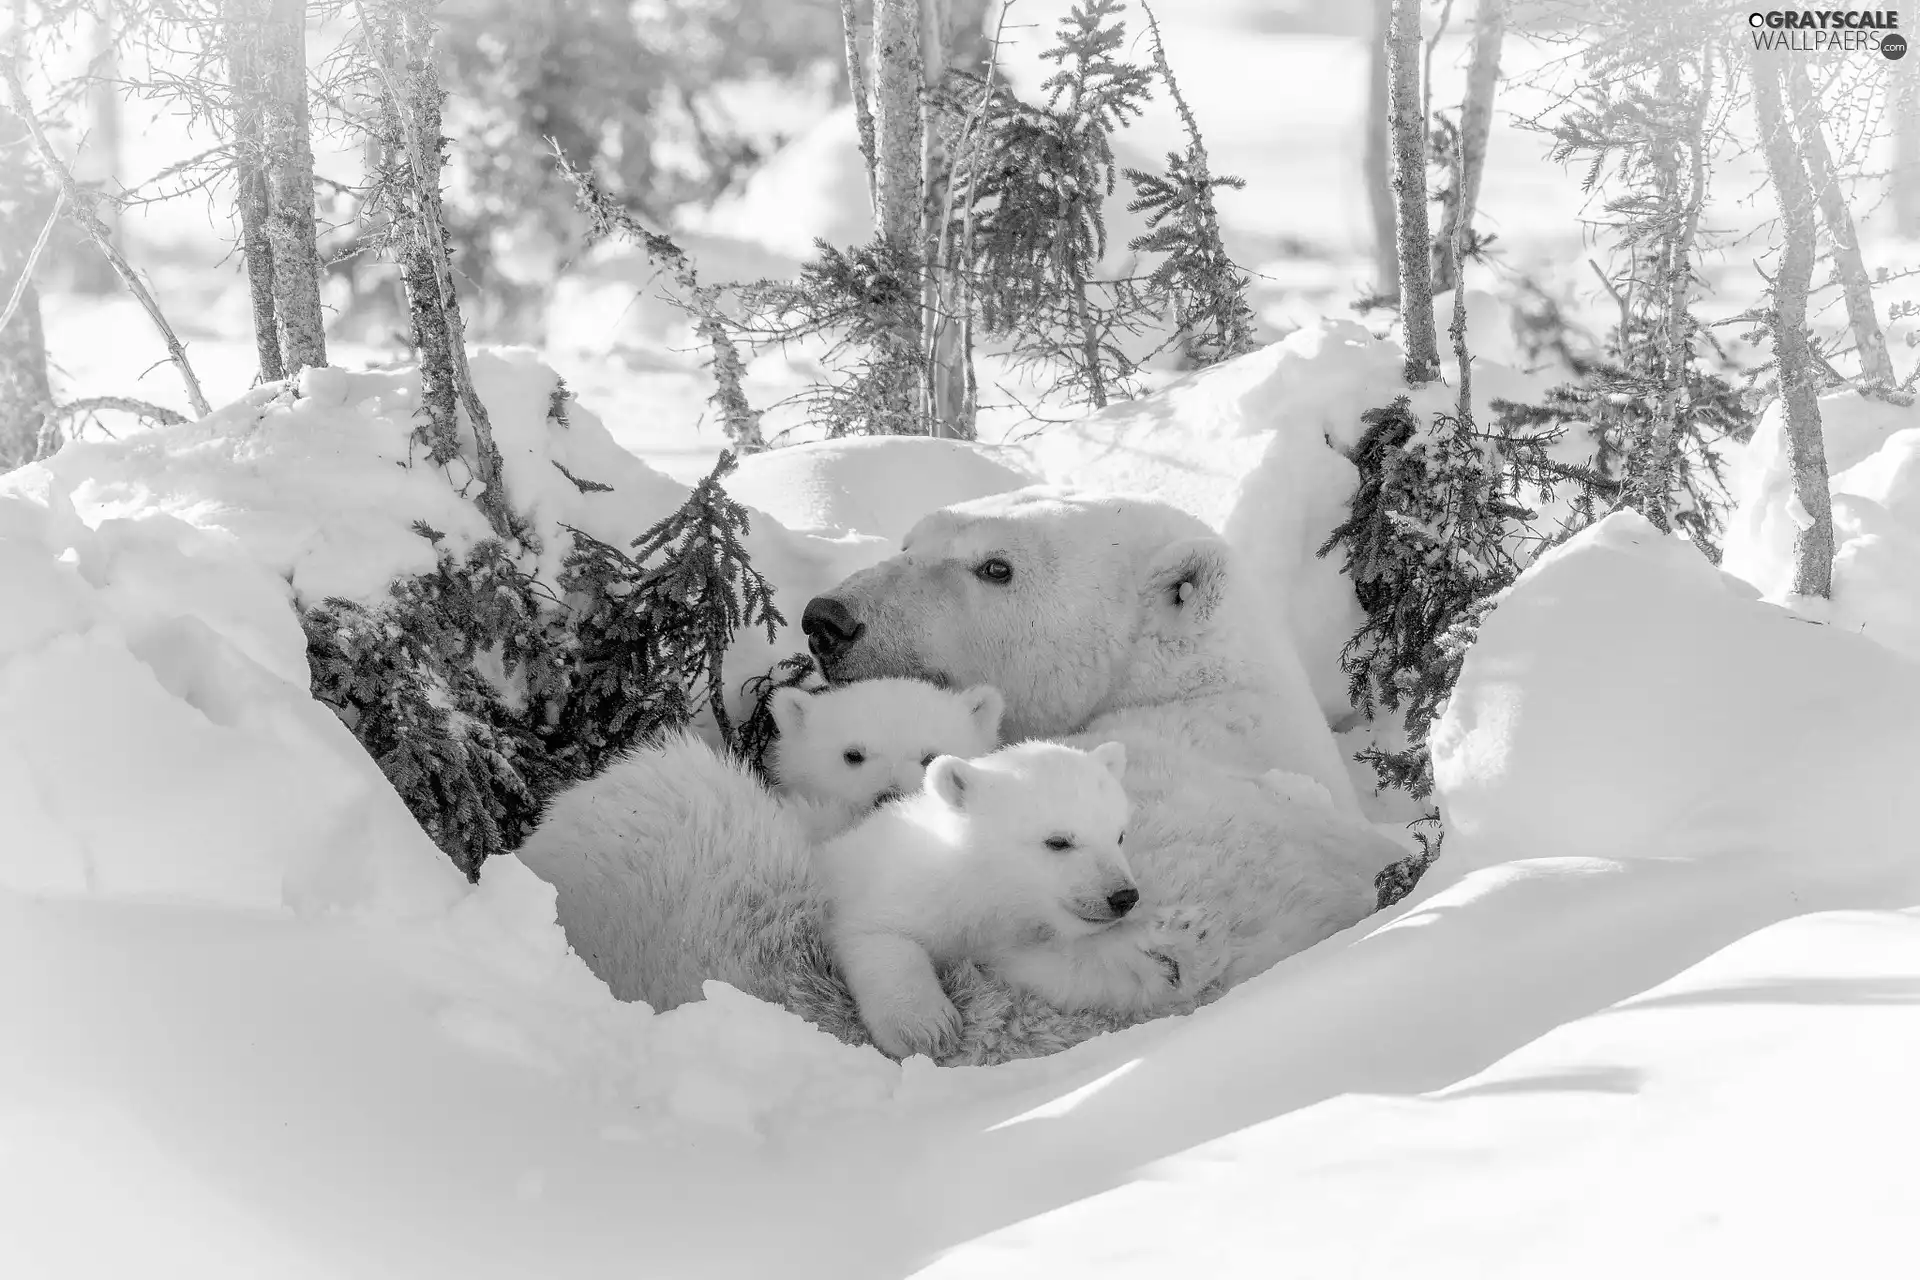 she-bear, winter, trees, viewes, Little bears, Polar Bears